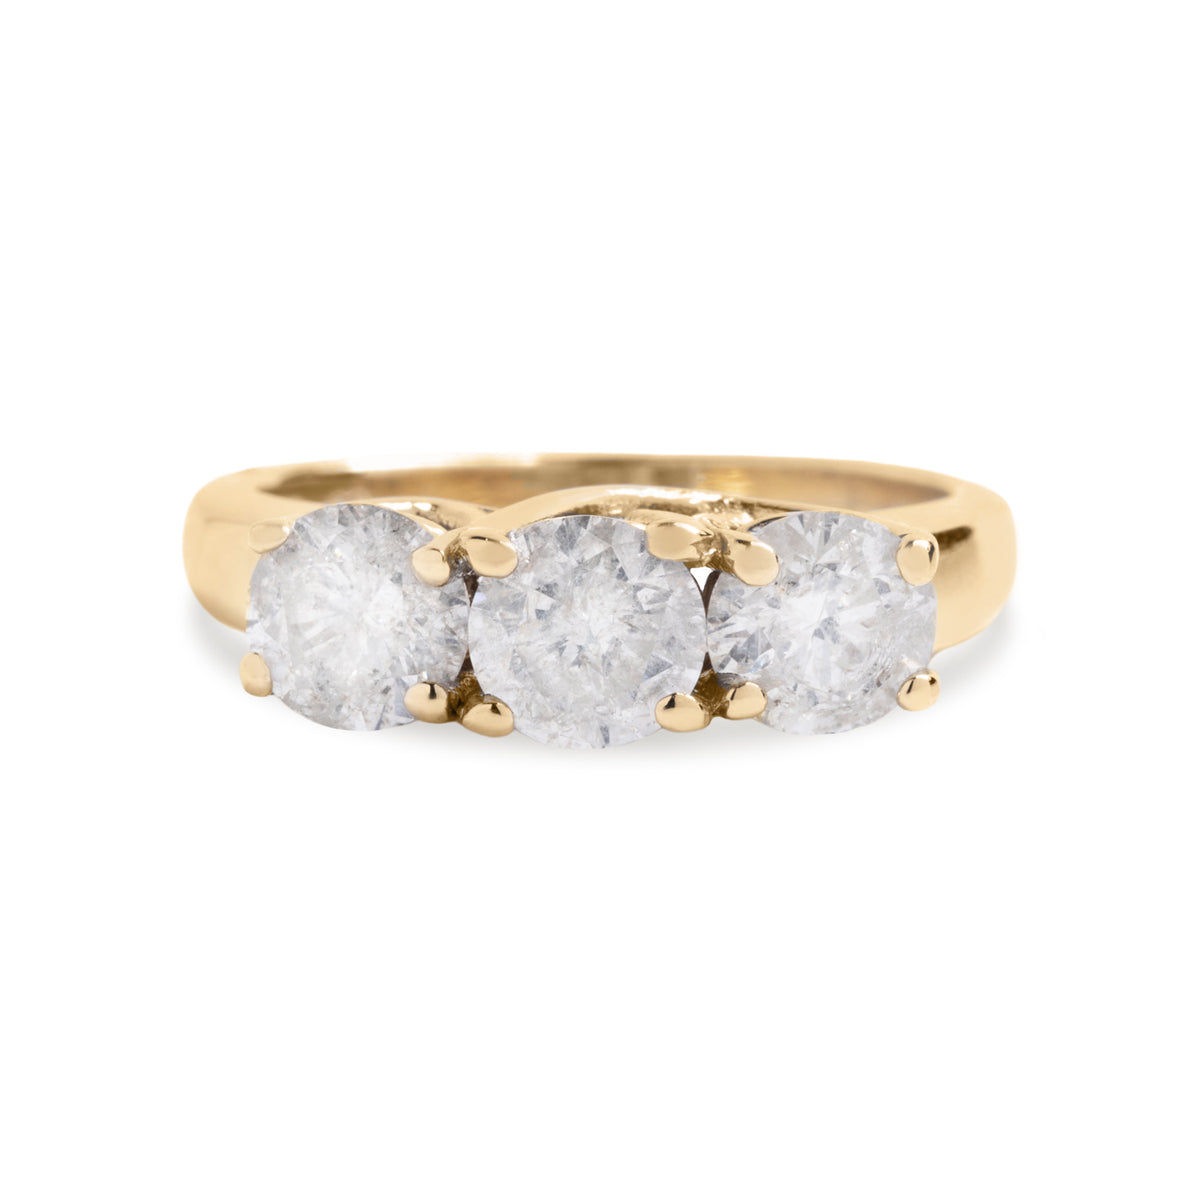 18k yellow gold estate 3 stone diamond engagement ring size 6